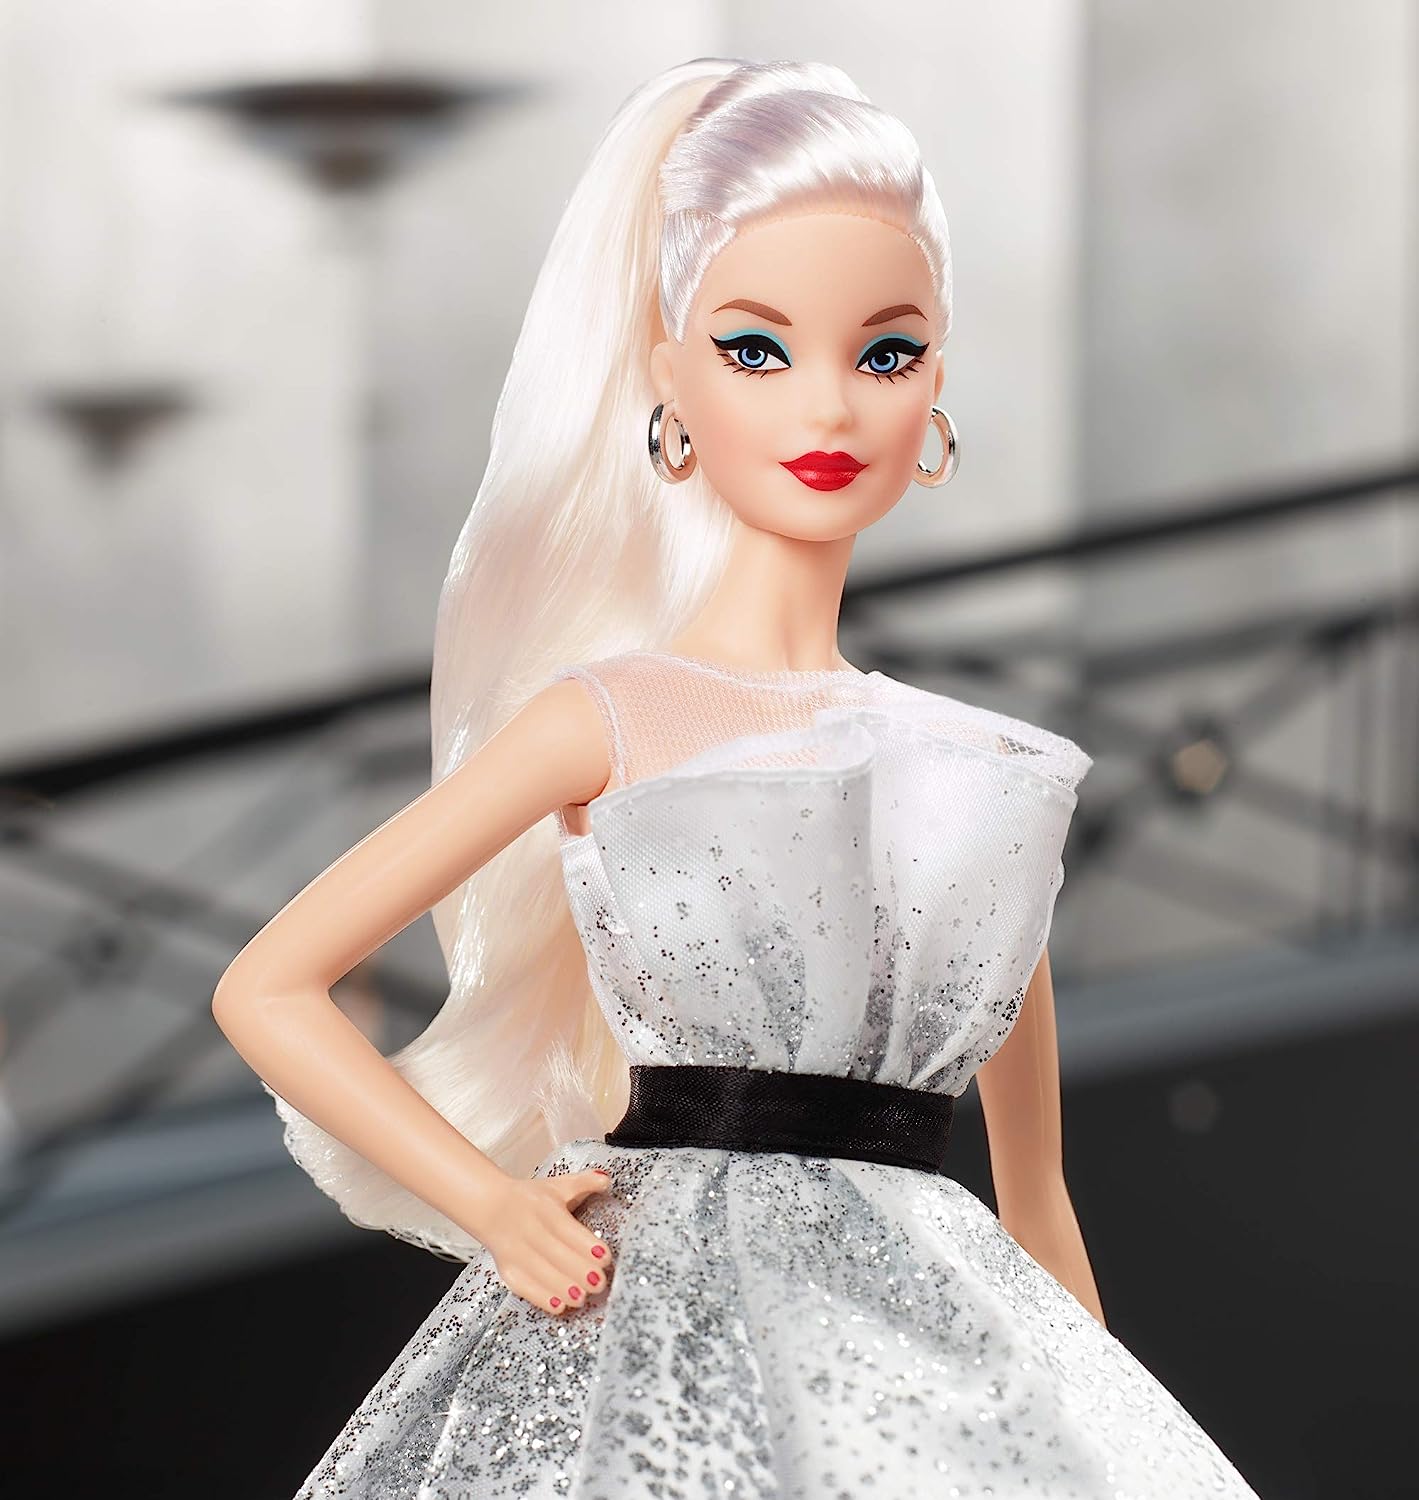 Barbie - 60th Anniversary Doll